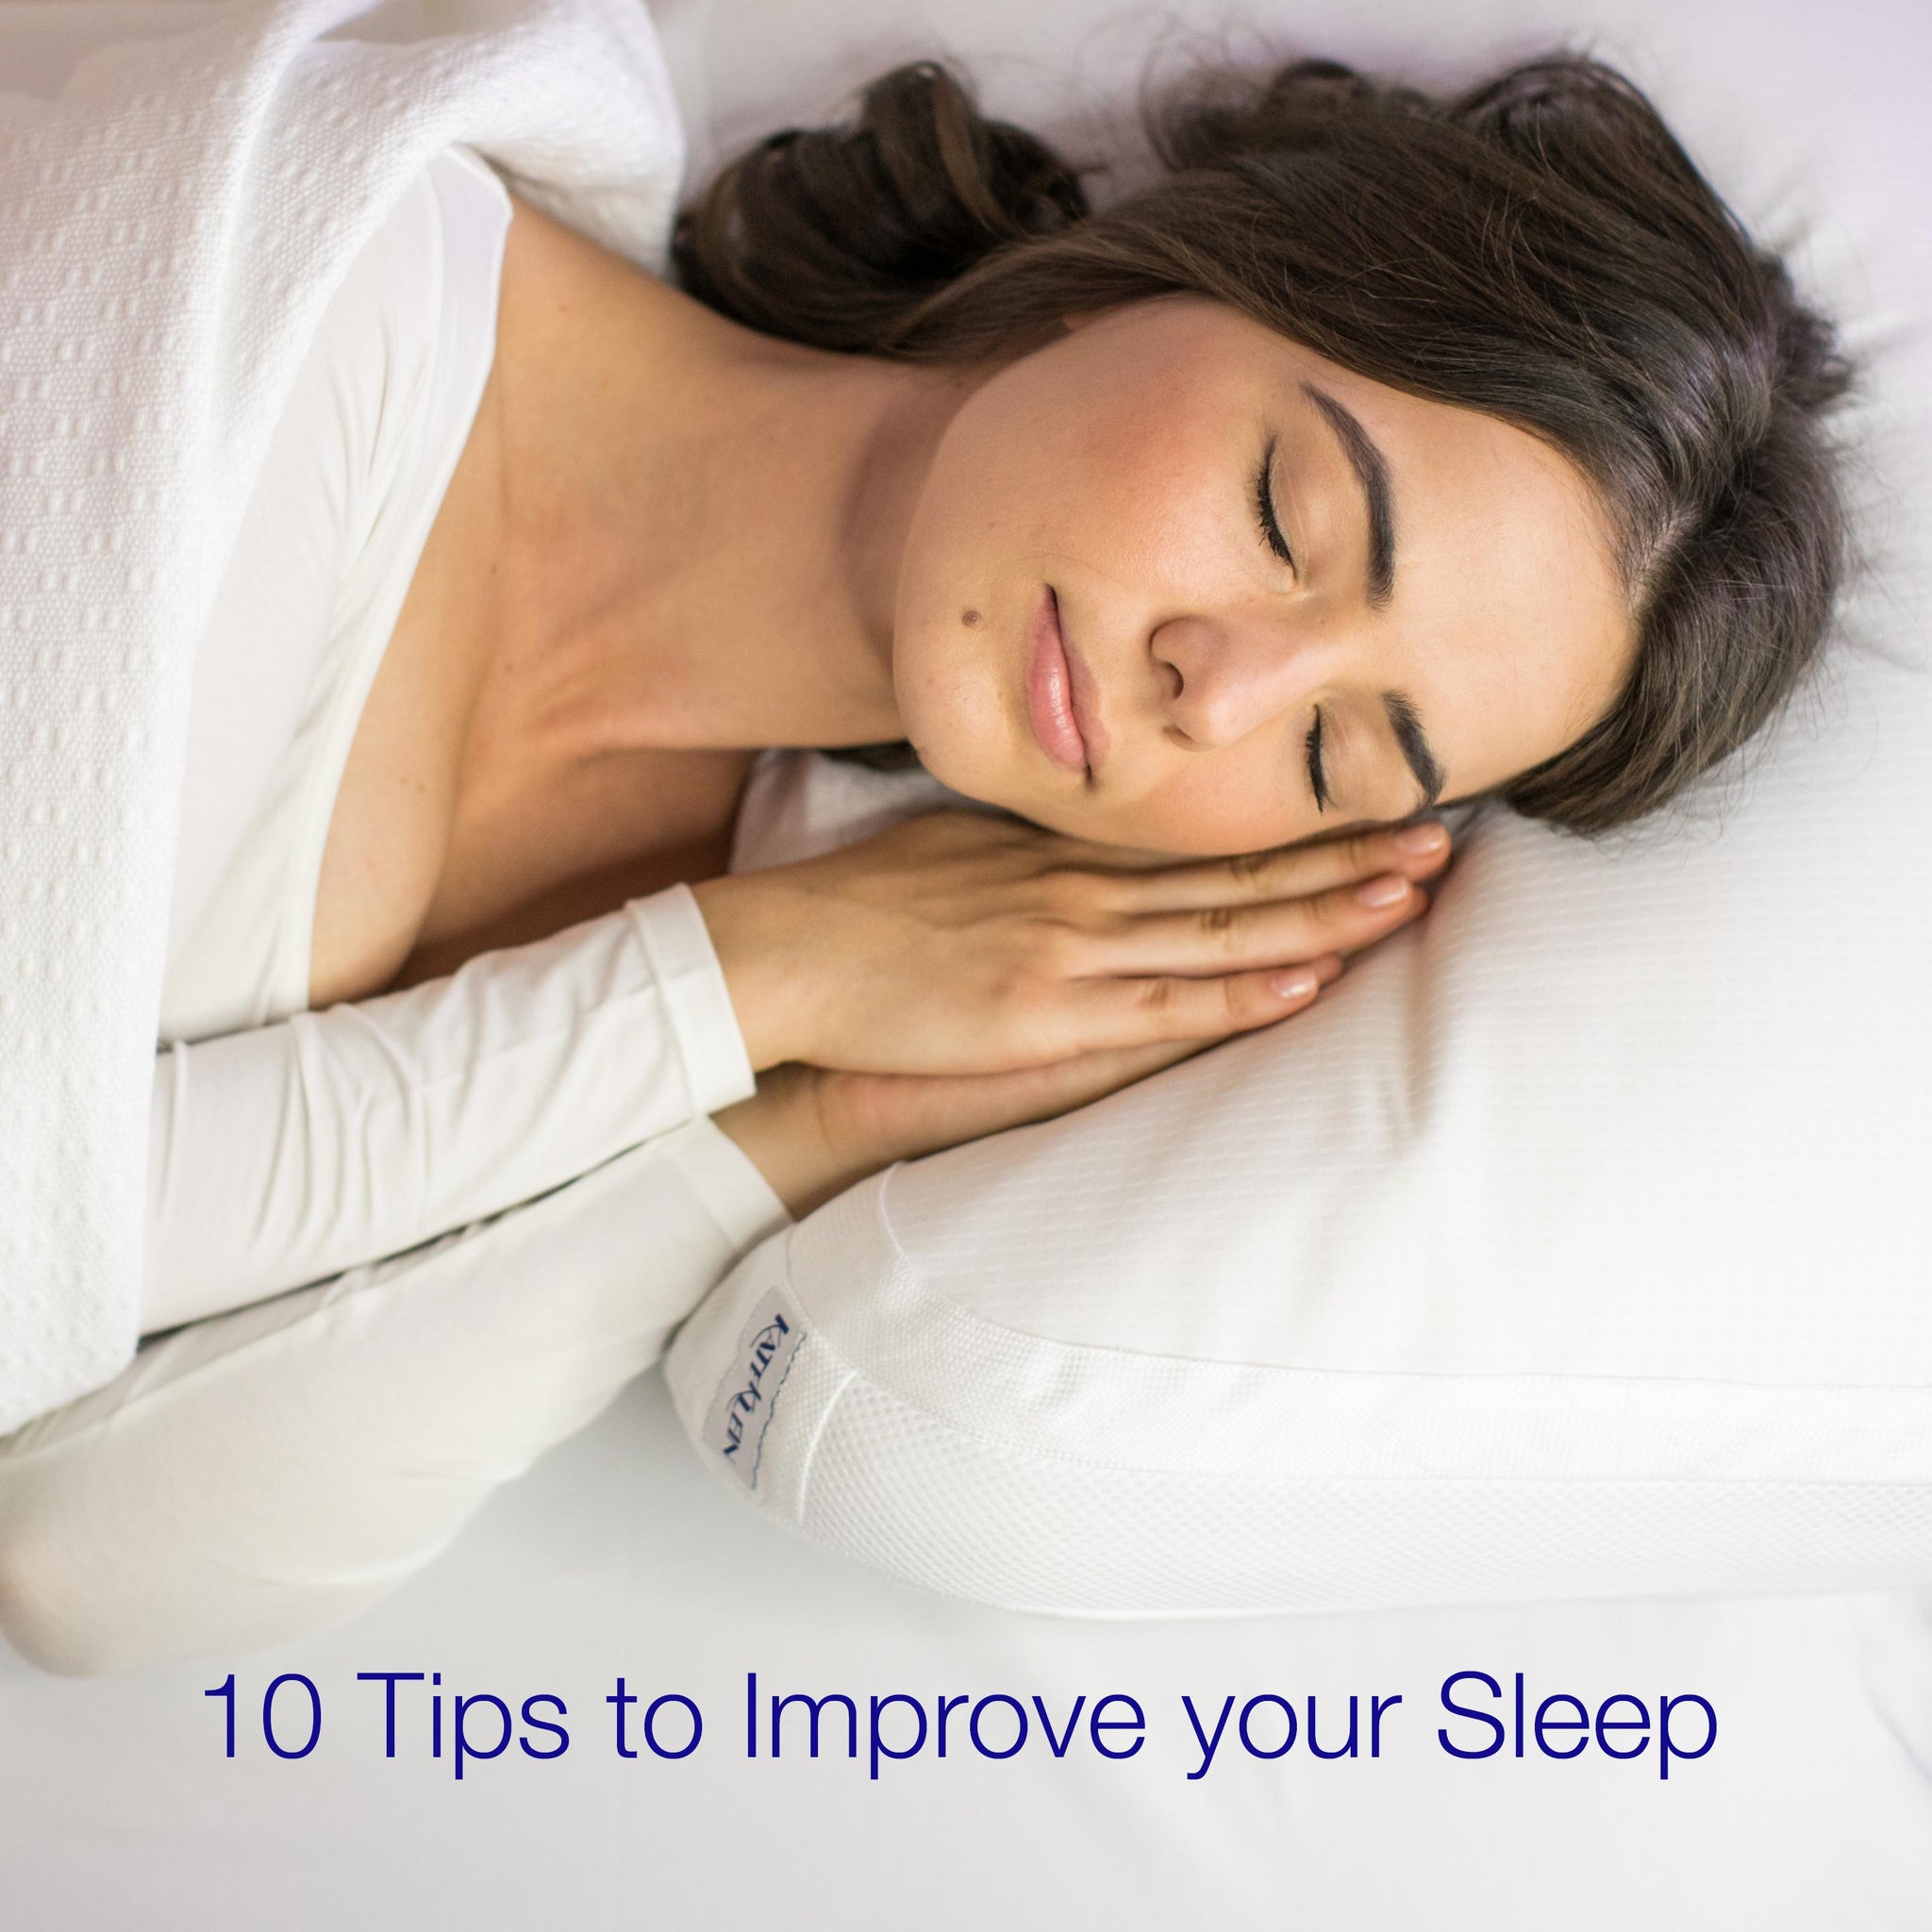 10 Tips to Improve your Sleep